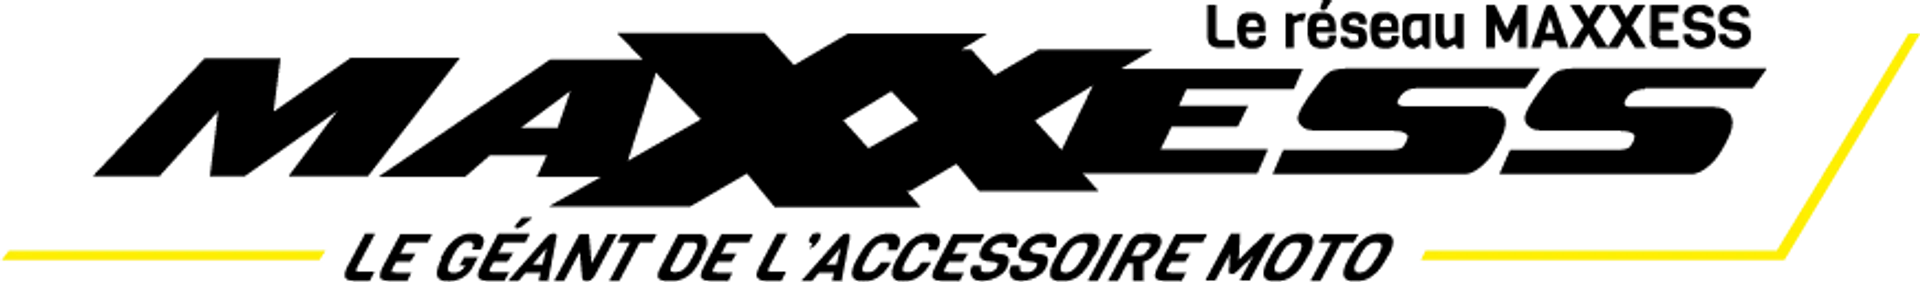 MAXXESS logo du catalogue